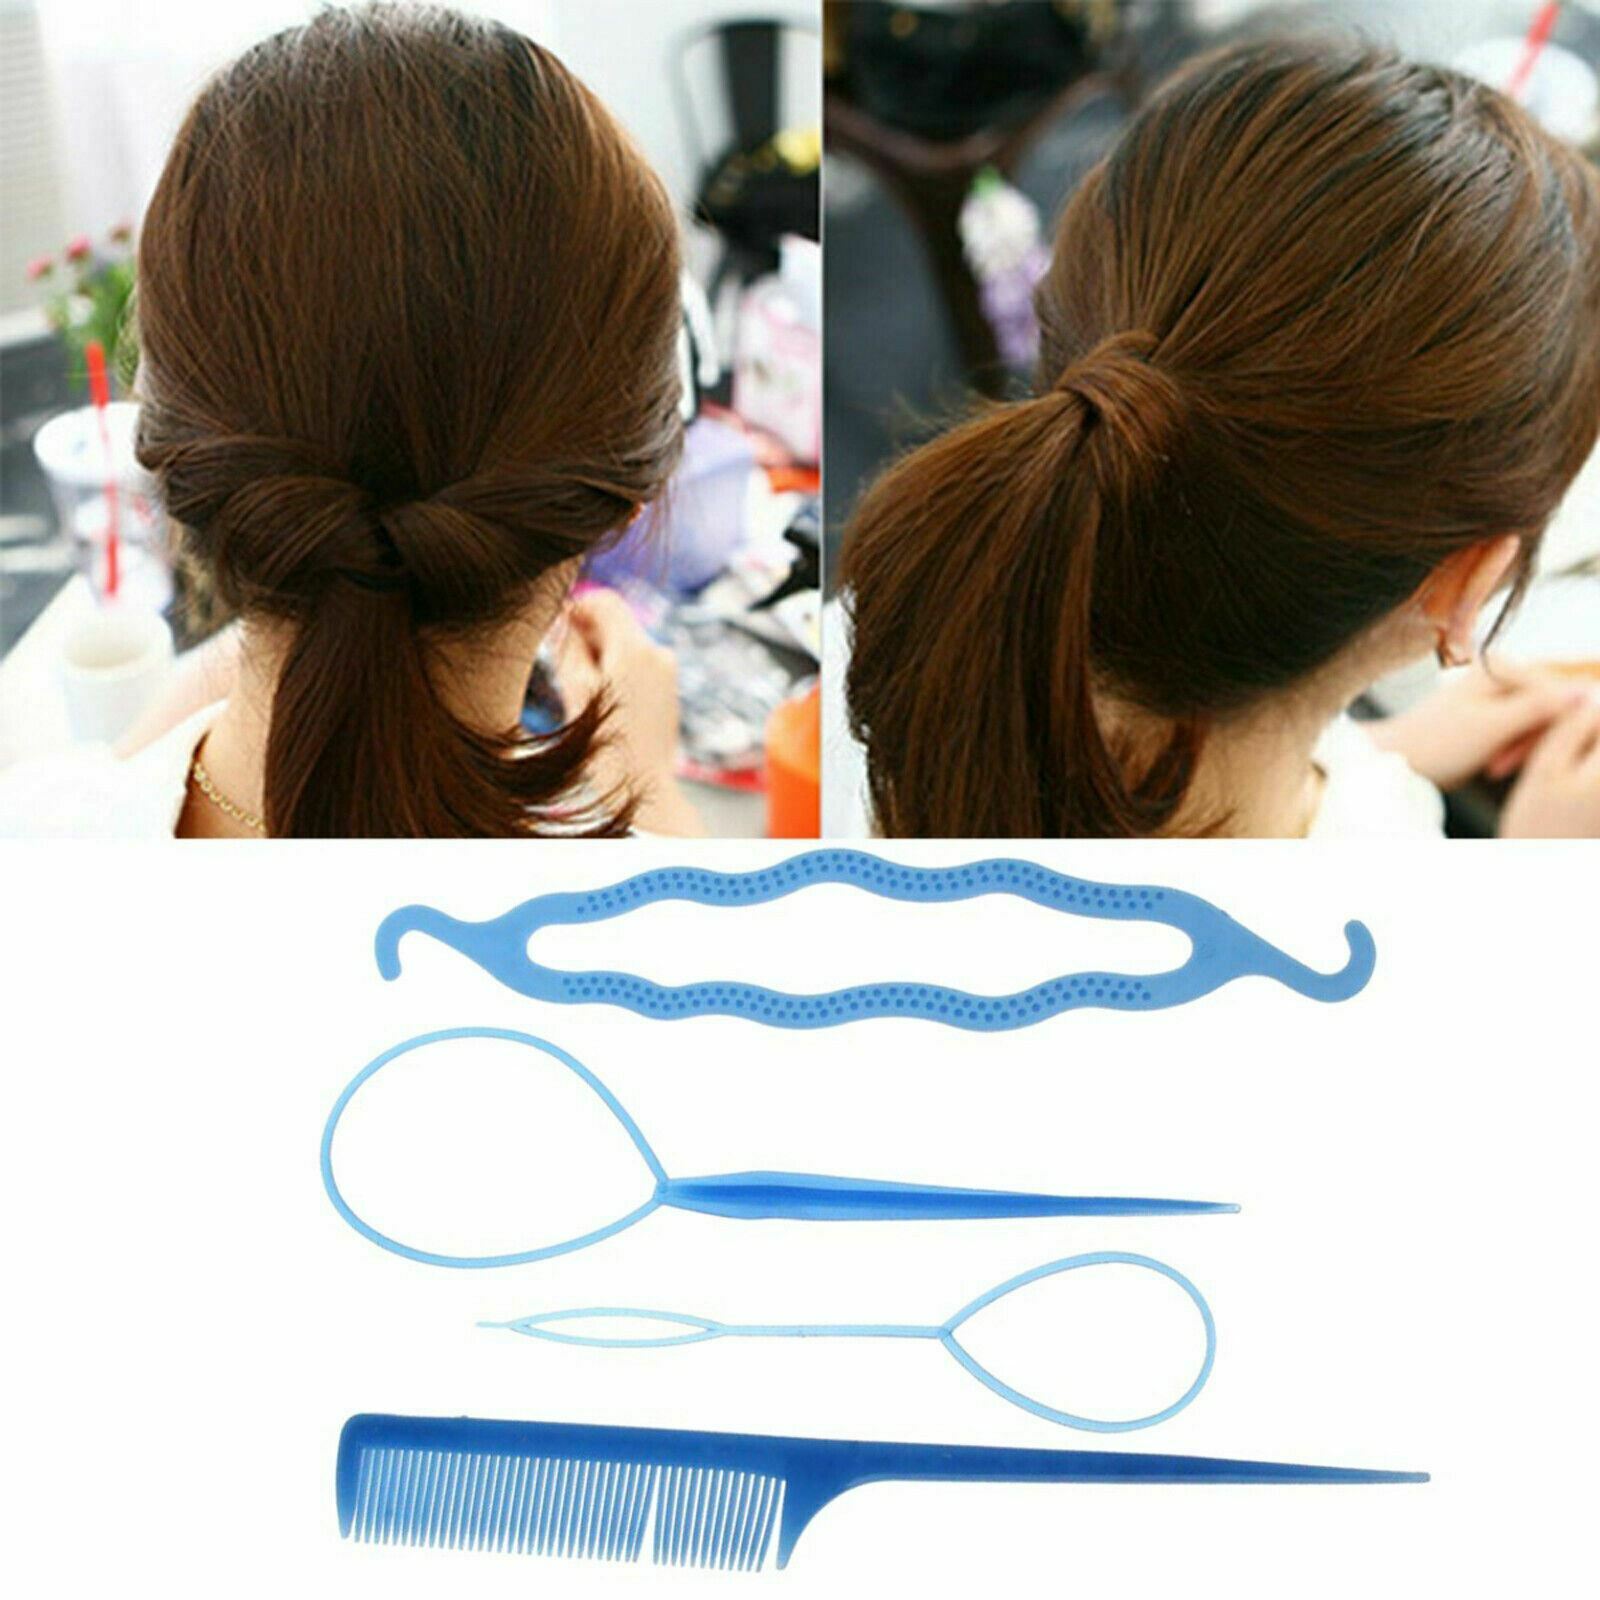 Women Hair Twist Styling Clip Stick Band Comb Donut Bun Maker Accessories Tool